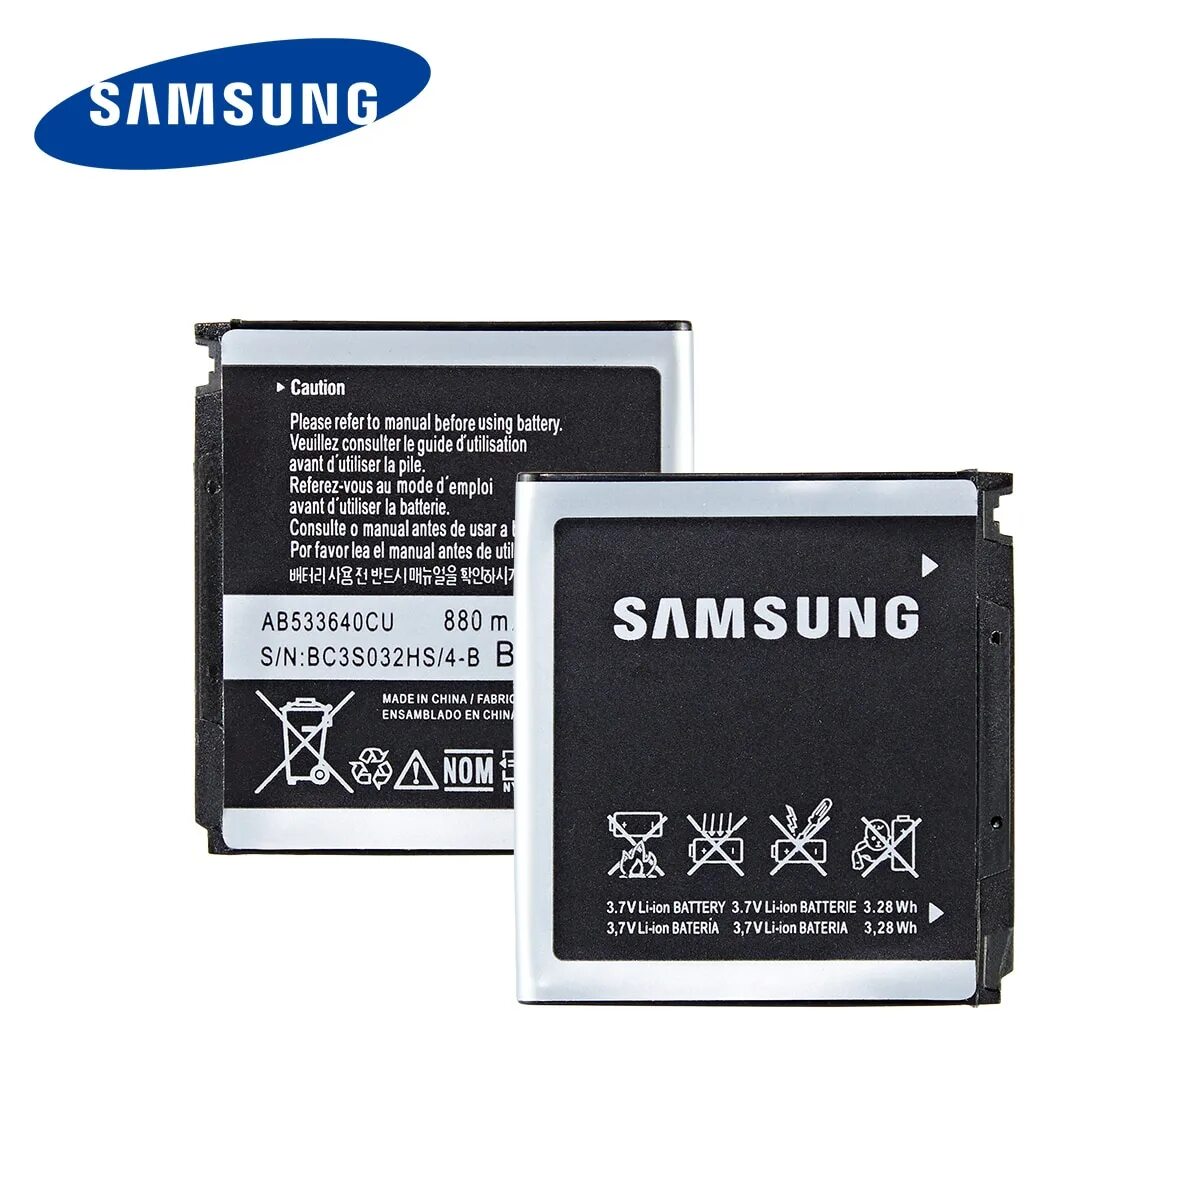 Samsung (ab533640cu. Аккумулятор для Samsung Galaxy s3600 (ab533640cu). Samsung s3600 Battery. Аккумулятор для Samsung s3600i.